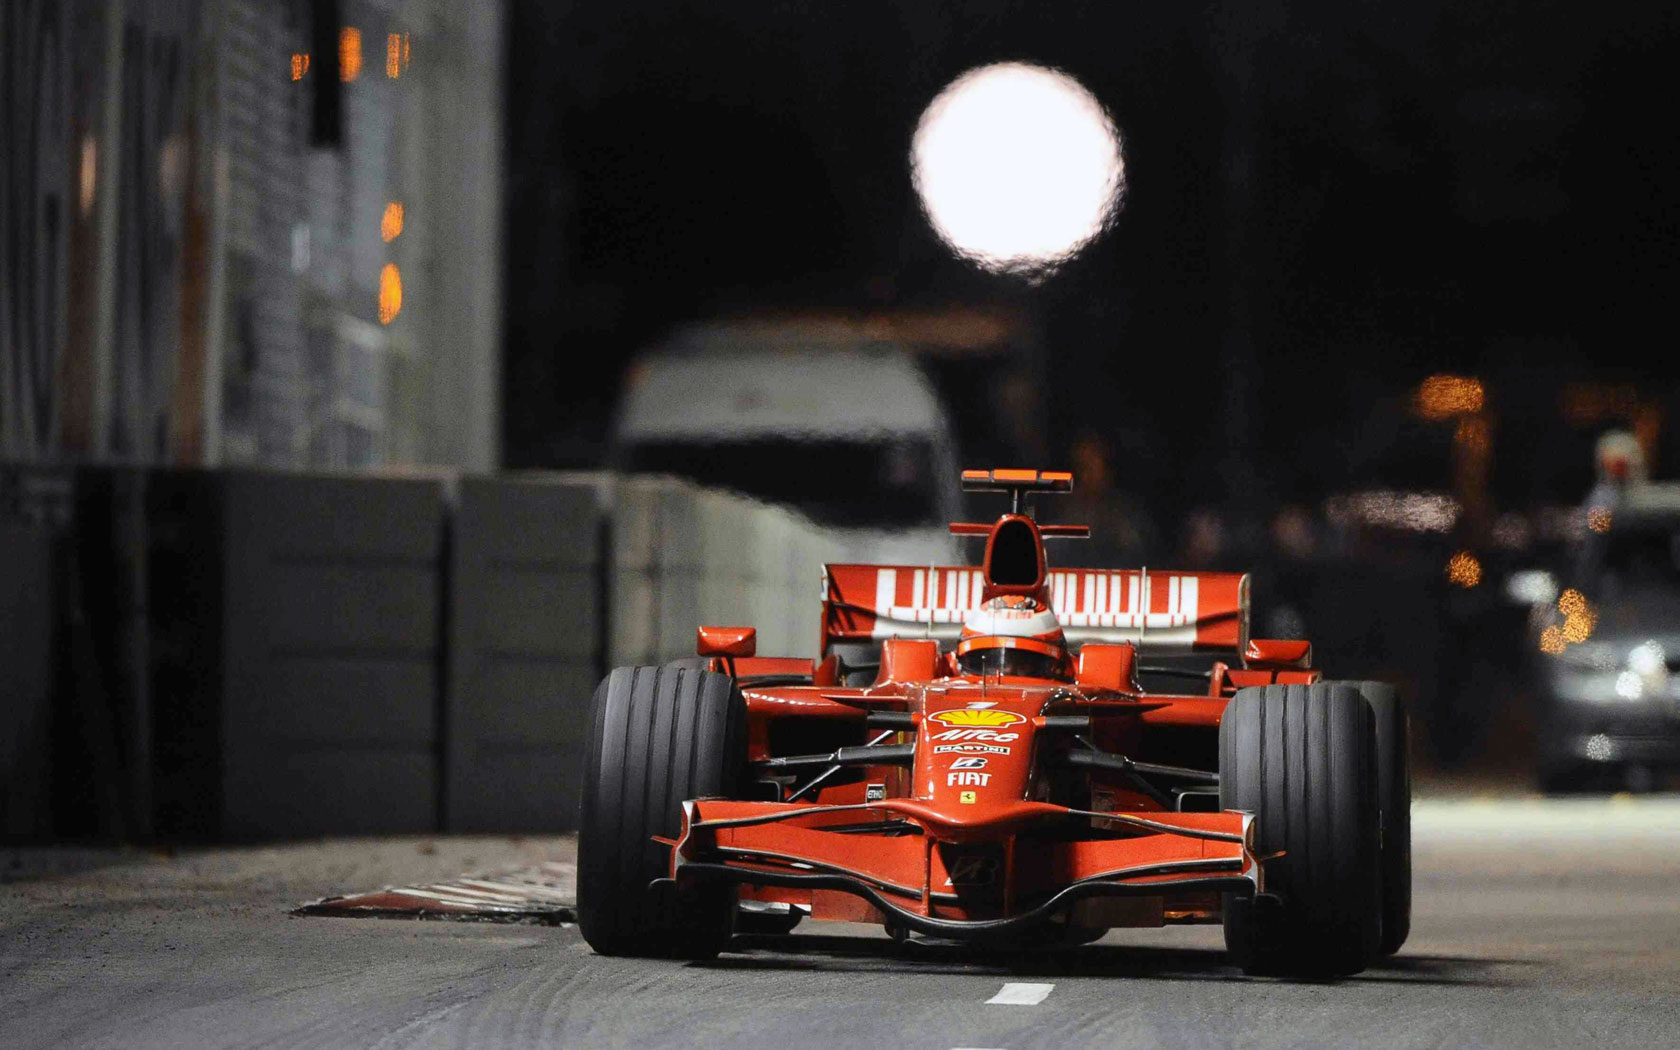 HD Wallpaper Formula Grand Prix Of Singapore F1 Fansite